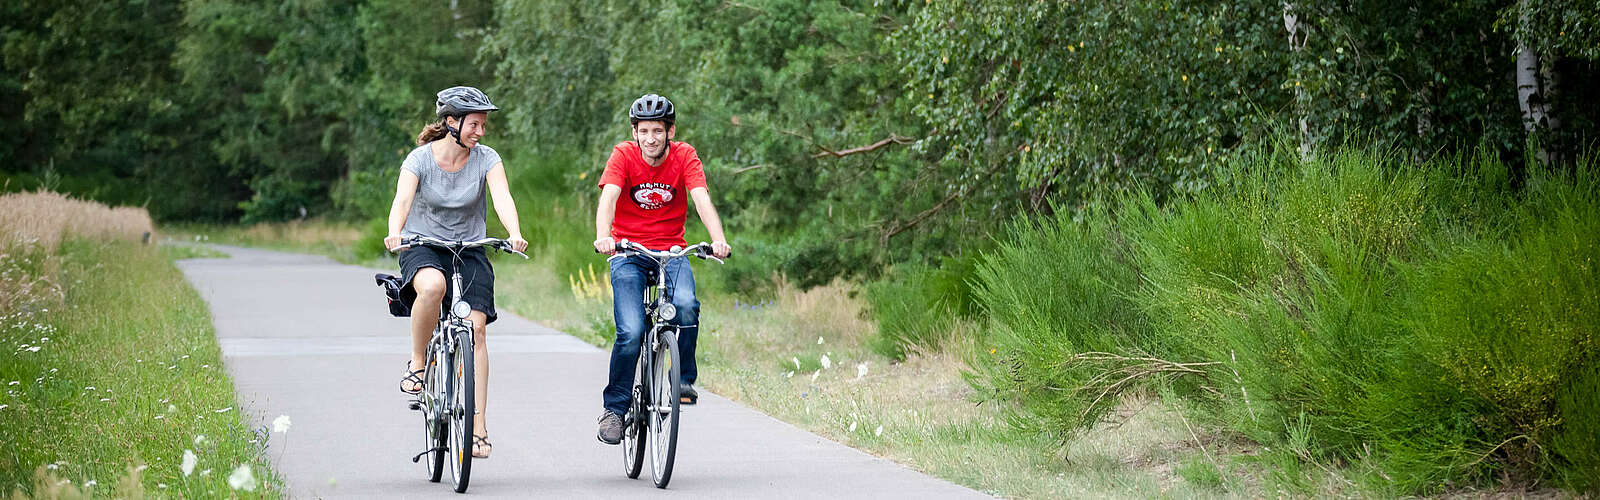 Radfahrer im Fläming,
        
    

        Foto: Tourismusverband Fläming e.V./Jedrzej Marzecki